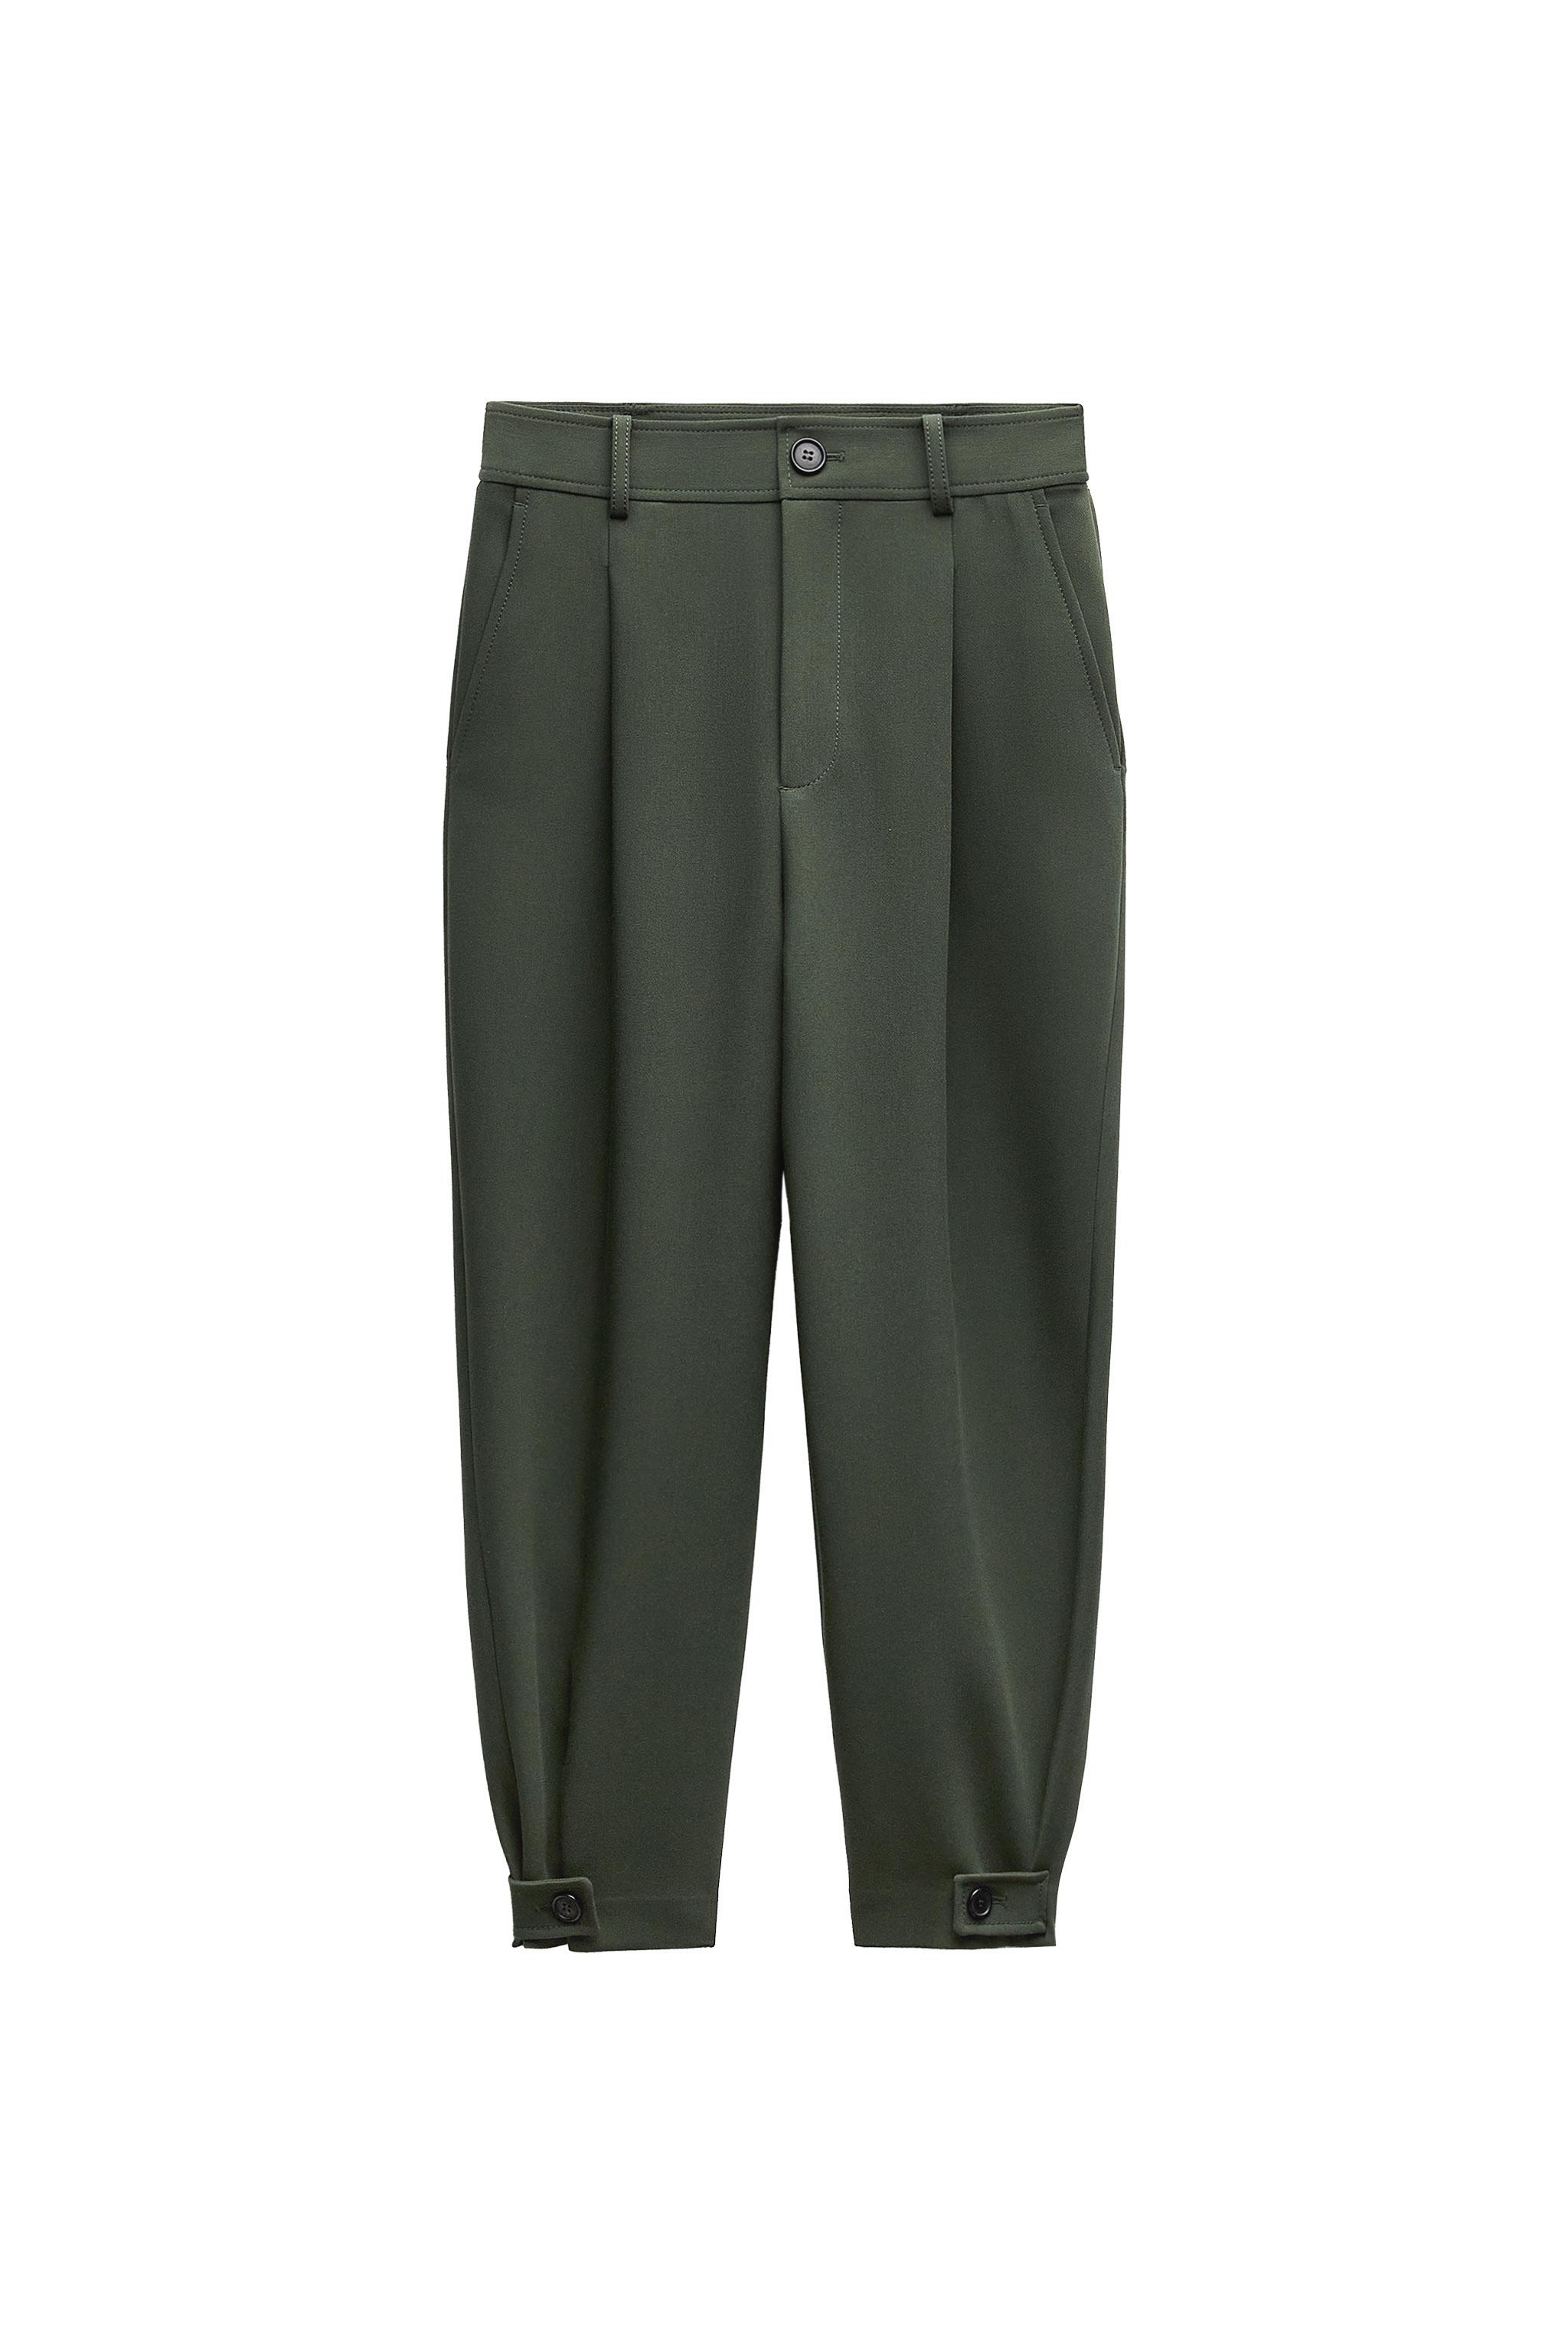 ZARA NEW WOMAN High Waist Full Length Trousers Pant Pearl Grey Xs-Xxl  7385/440 £43.27 - PicClick UK